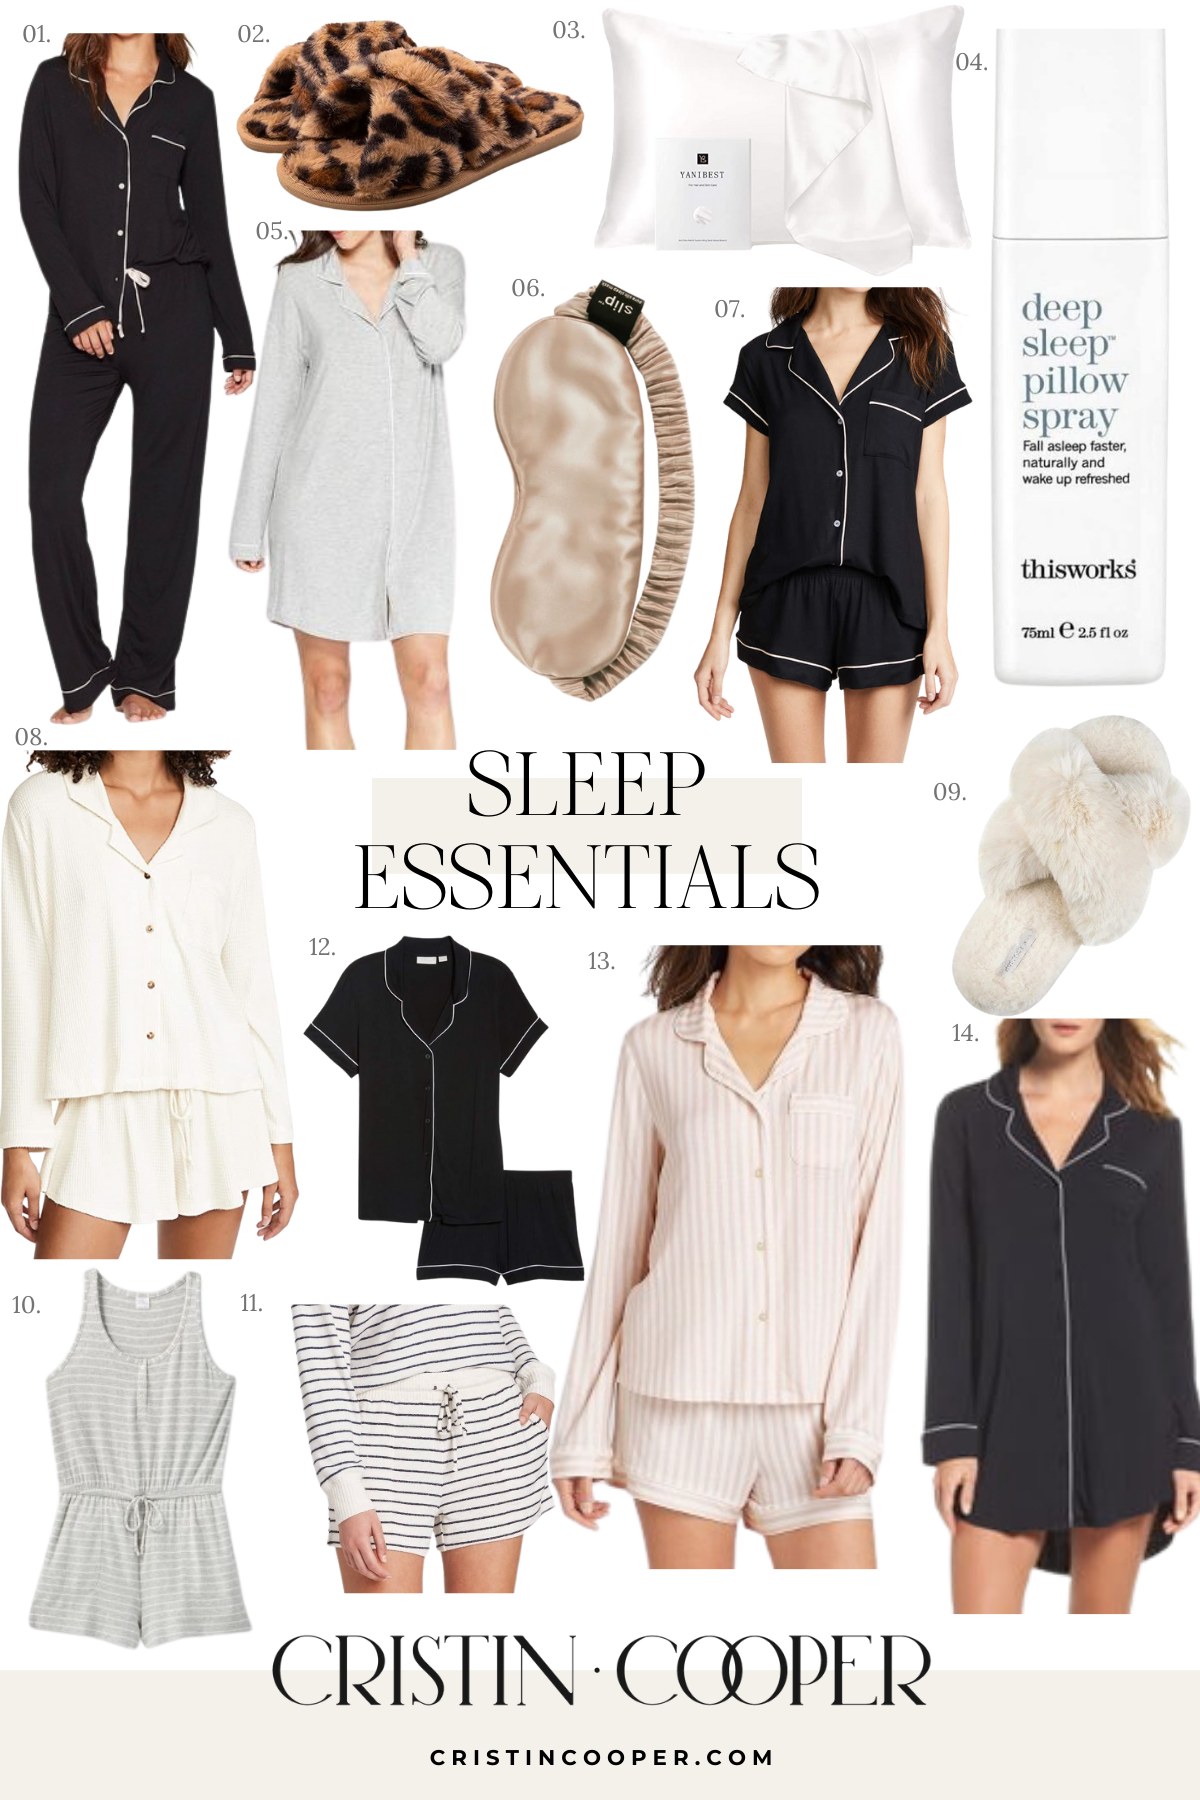 Cristin Cooper's sleep essentials, sleepwear and pajamas for a good night's sleep.